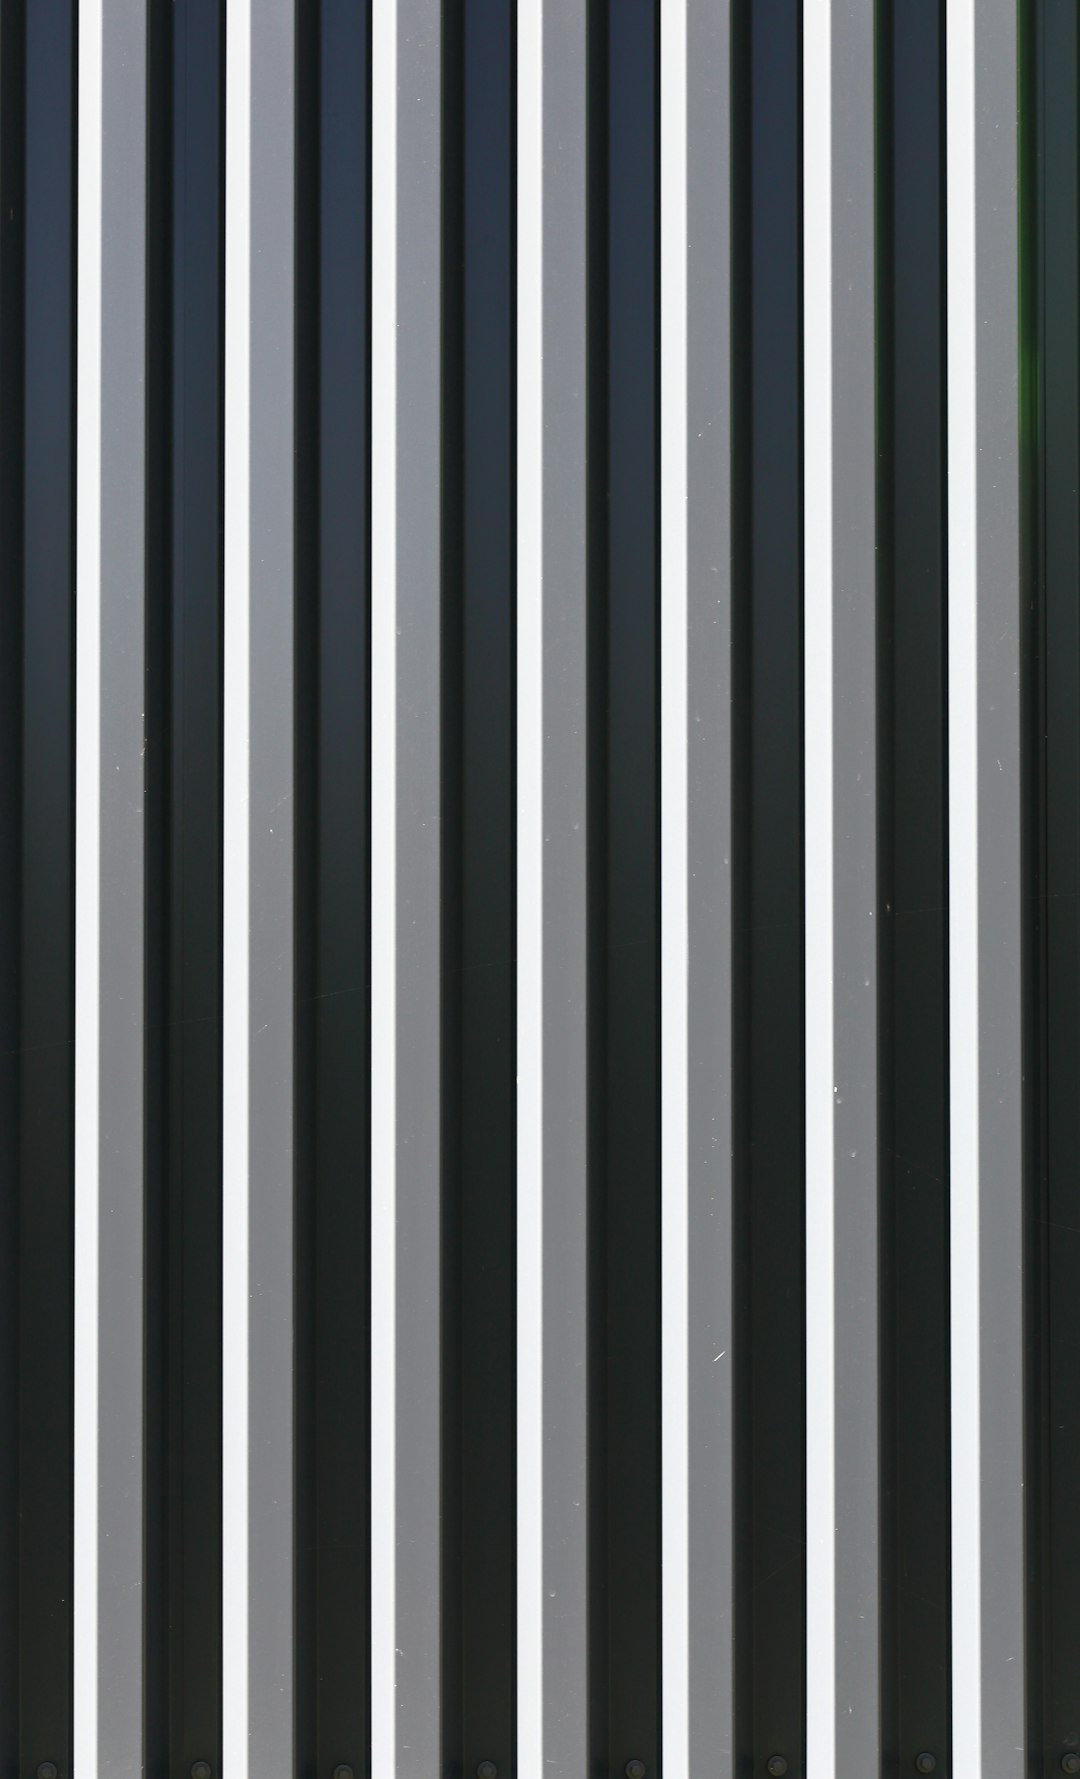 black white and green striped textile